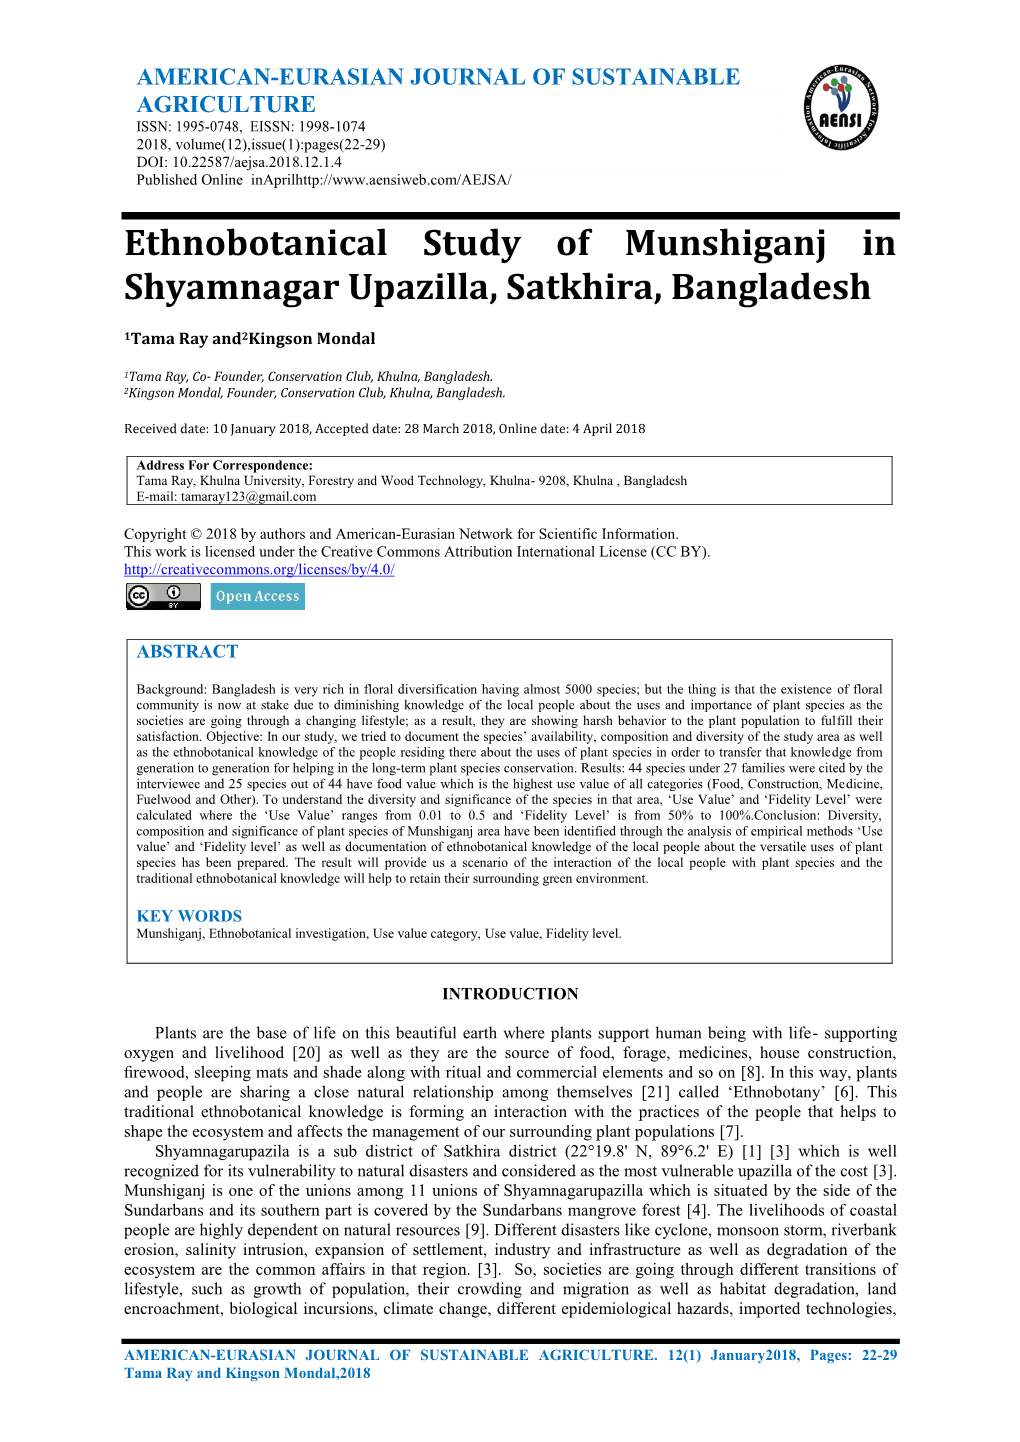 Ethnobotanical Study of Munshiganj in Shyamnagar Upazilla, Satkhira